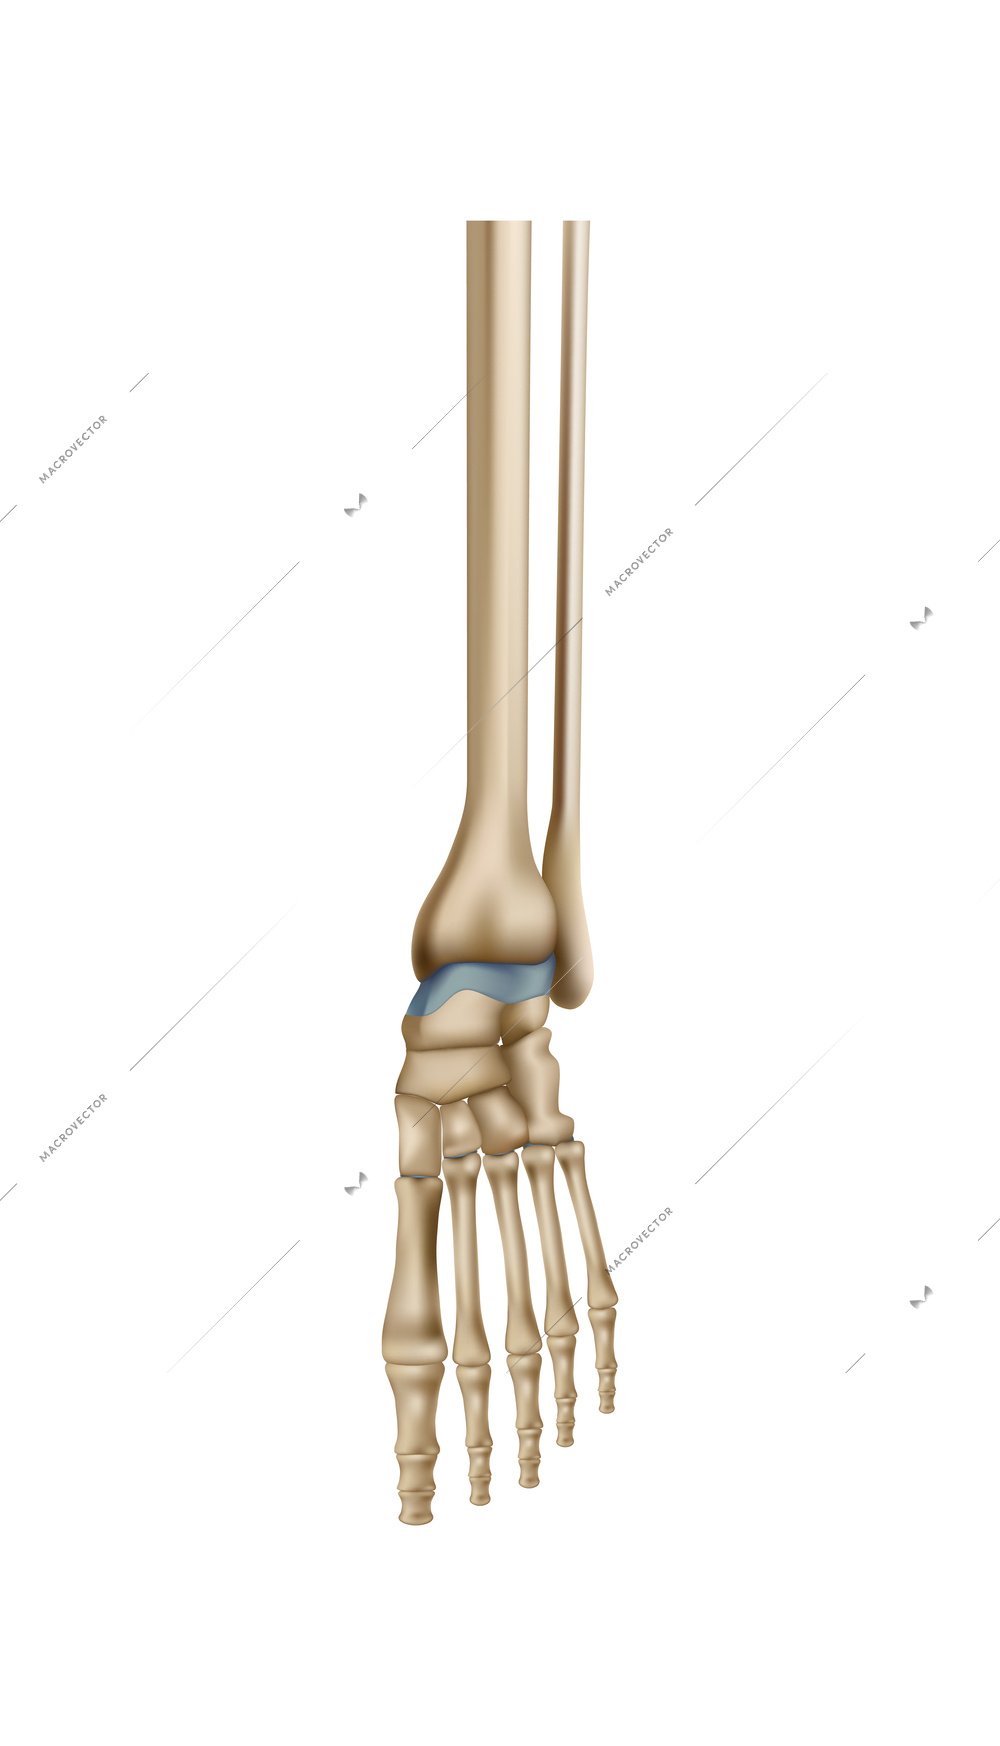 Realistic human foot bones anatomy vector illustration